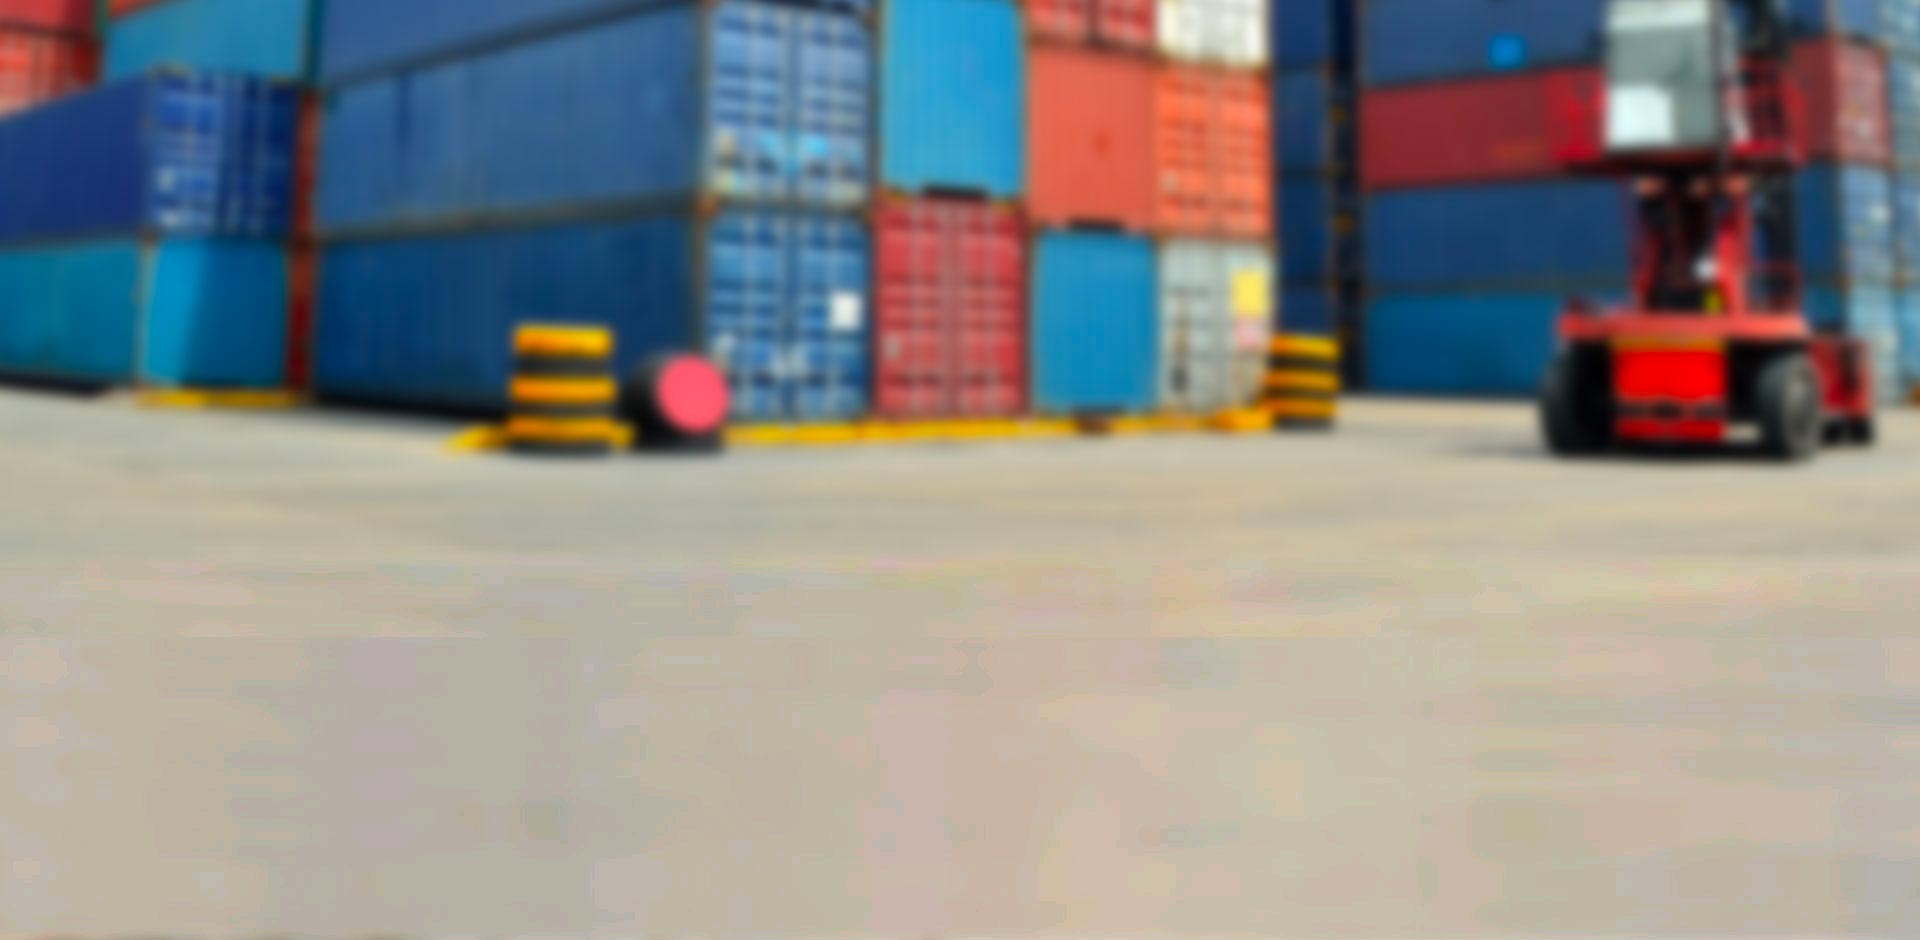 emploi logistique  transport et supply chain   jobtransport